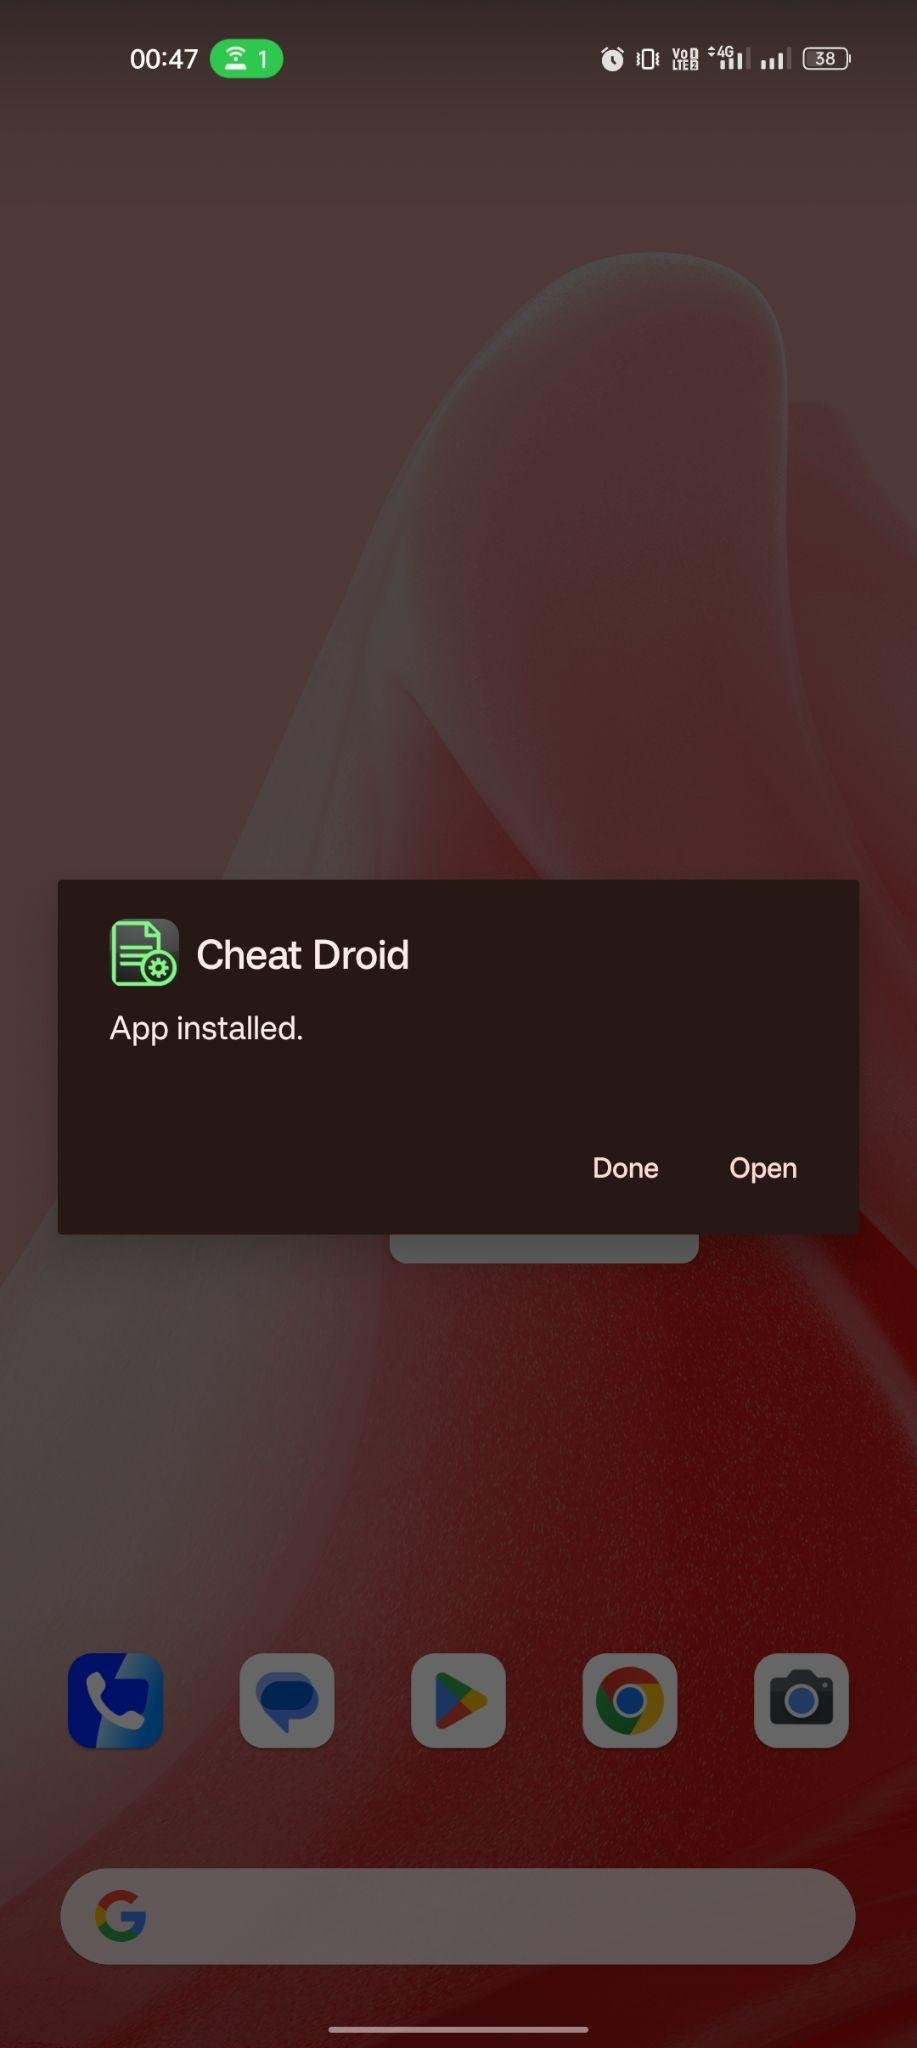 Cheat Droid Pro apk installed